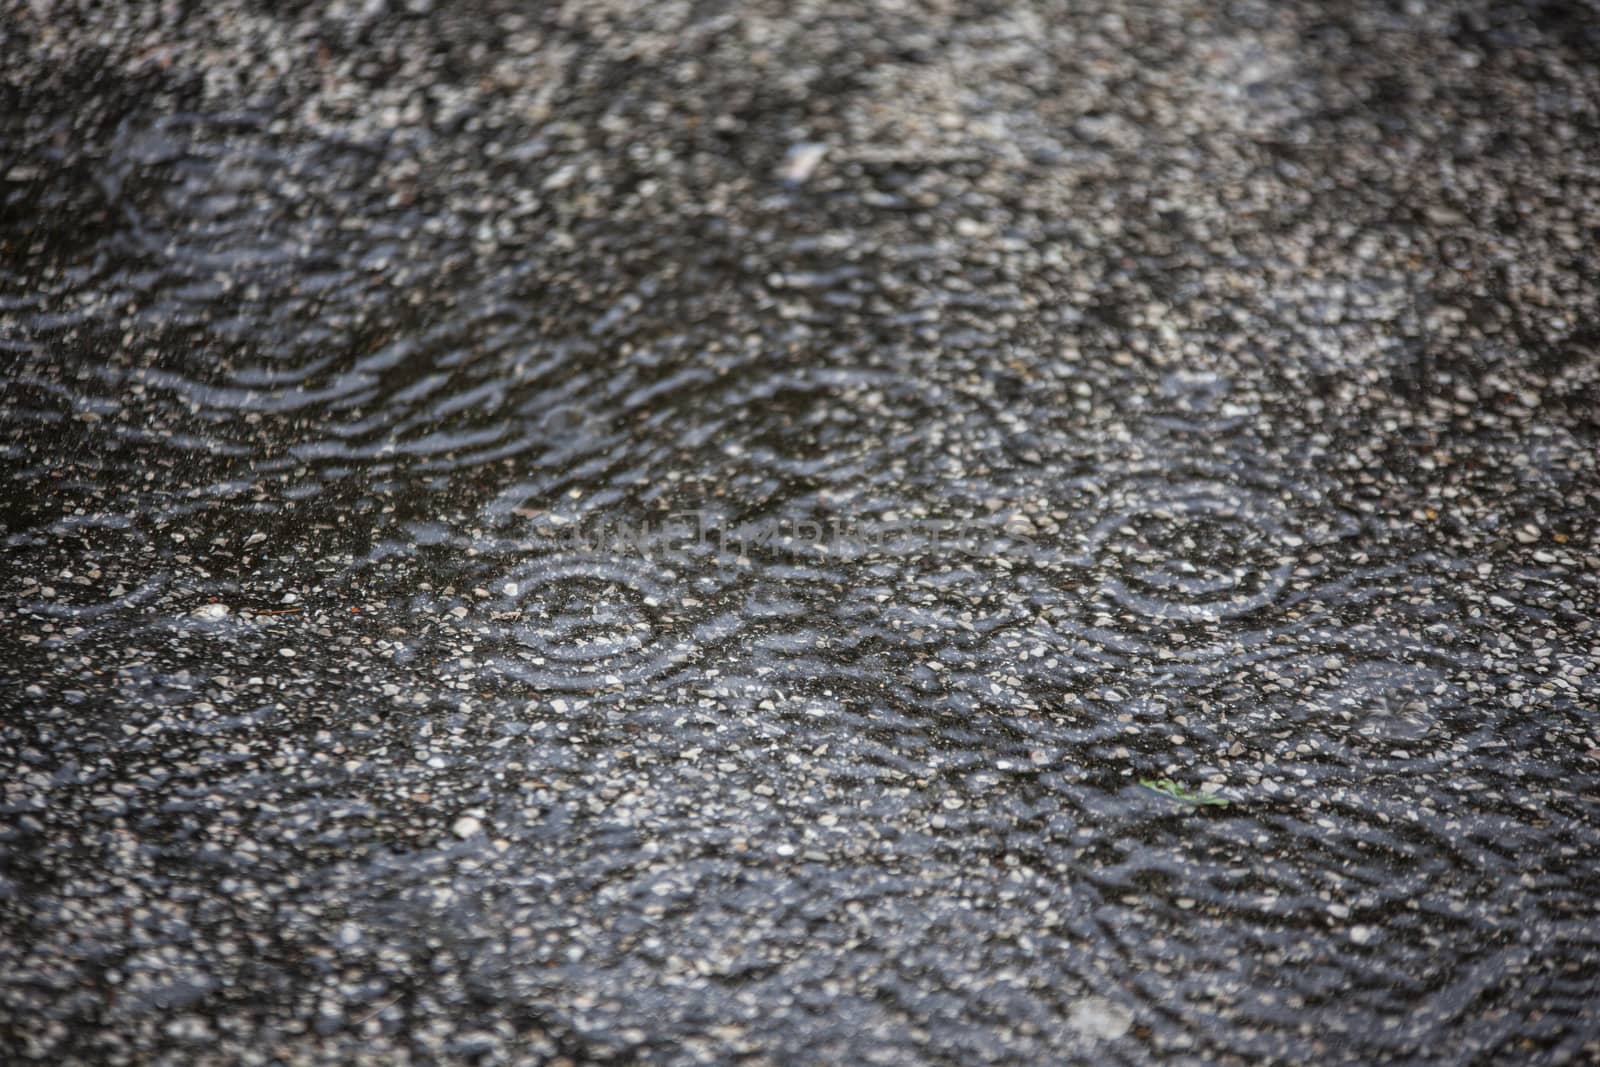 Texture of Asphalt with falling rain drops detail